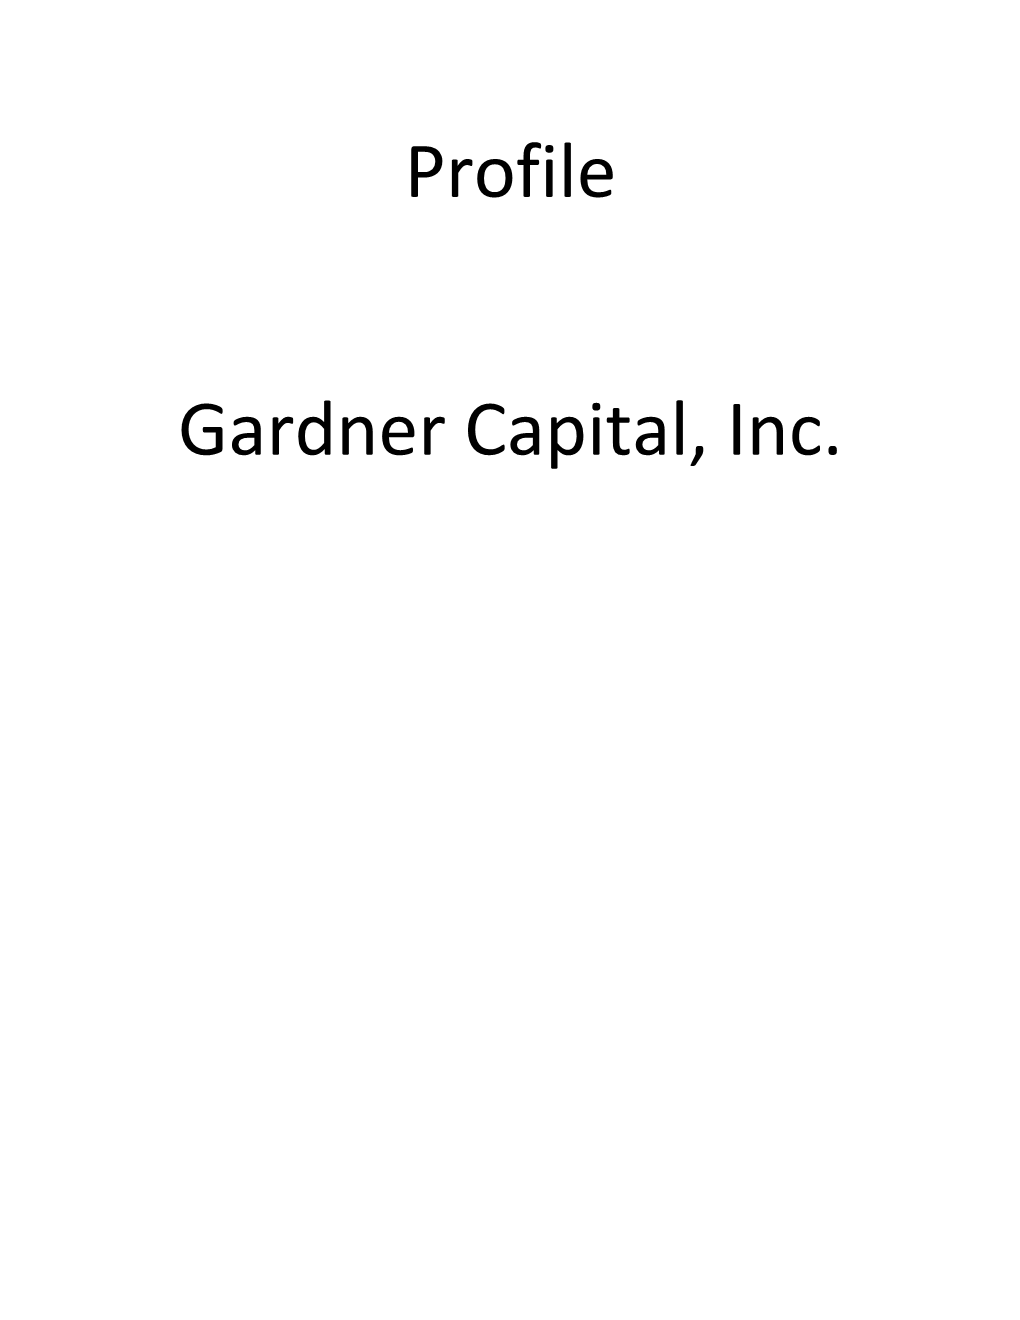 Gardner Capital, Inc